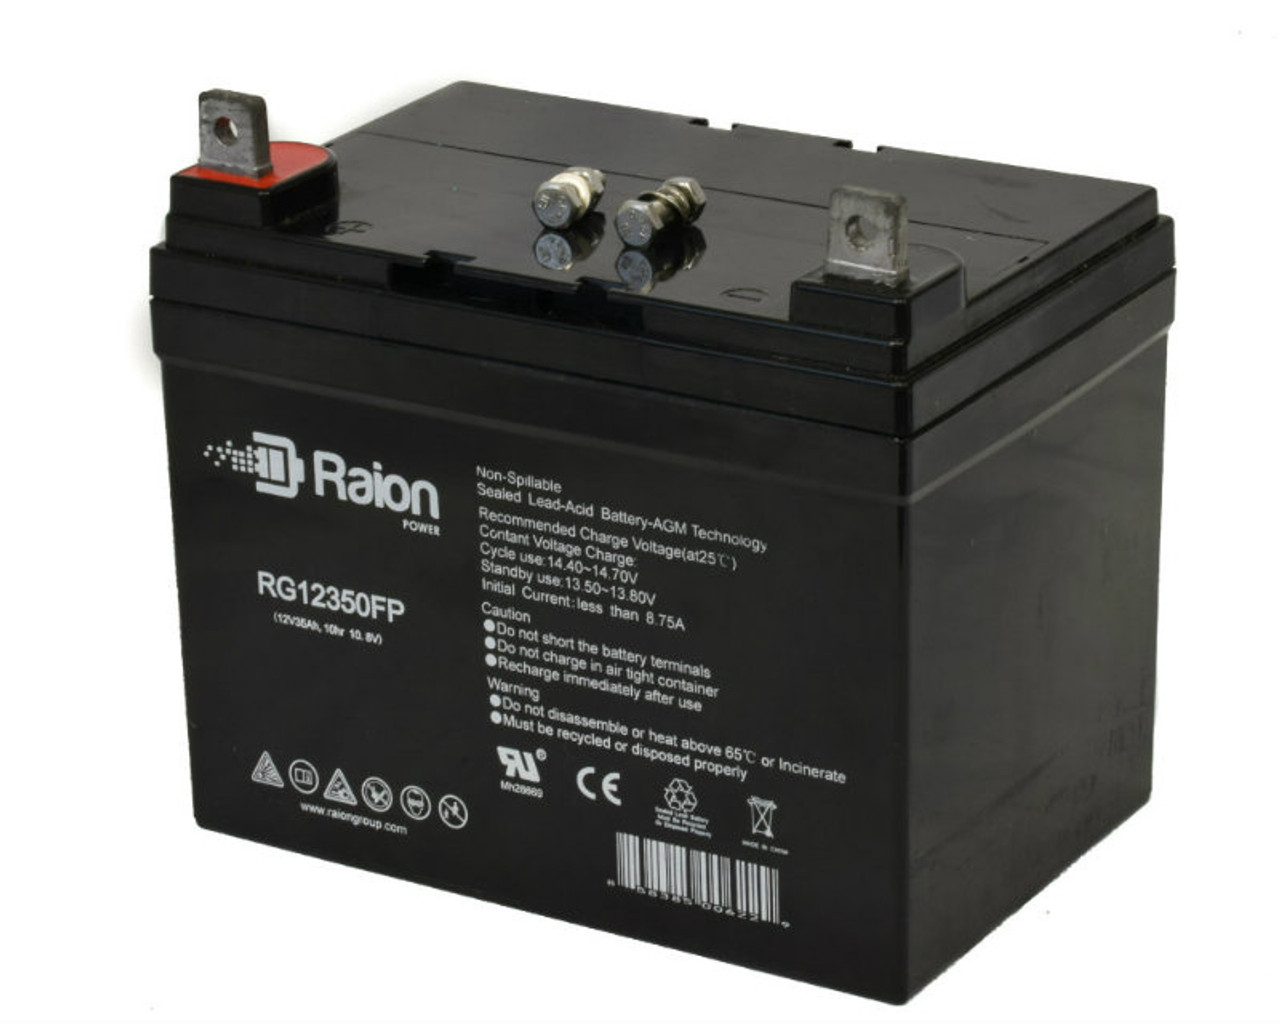 Raion Power Replacement 12V 35Ah Battery for John Deere STX46 - 1 Pack